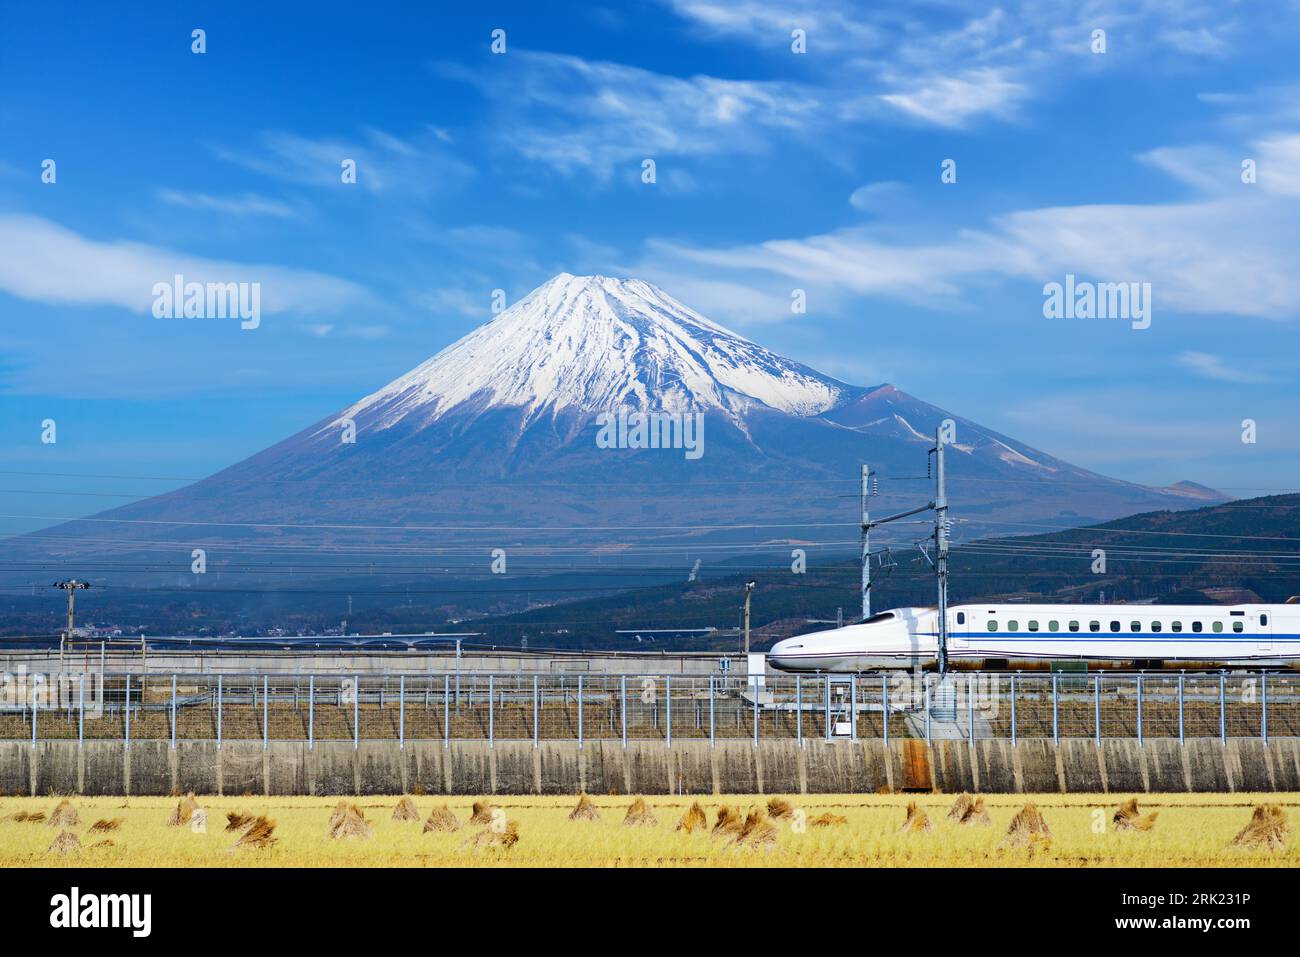 Mt. Fuji, Japan with the bullet train below. Stock Photo